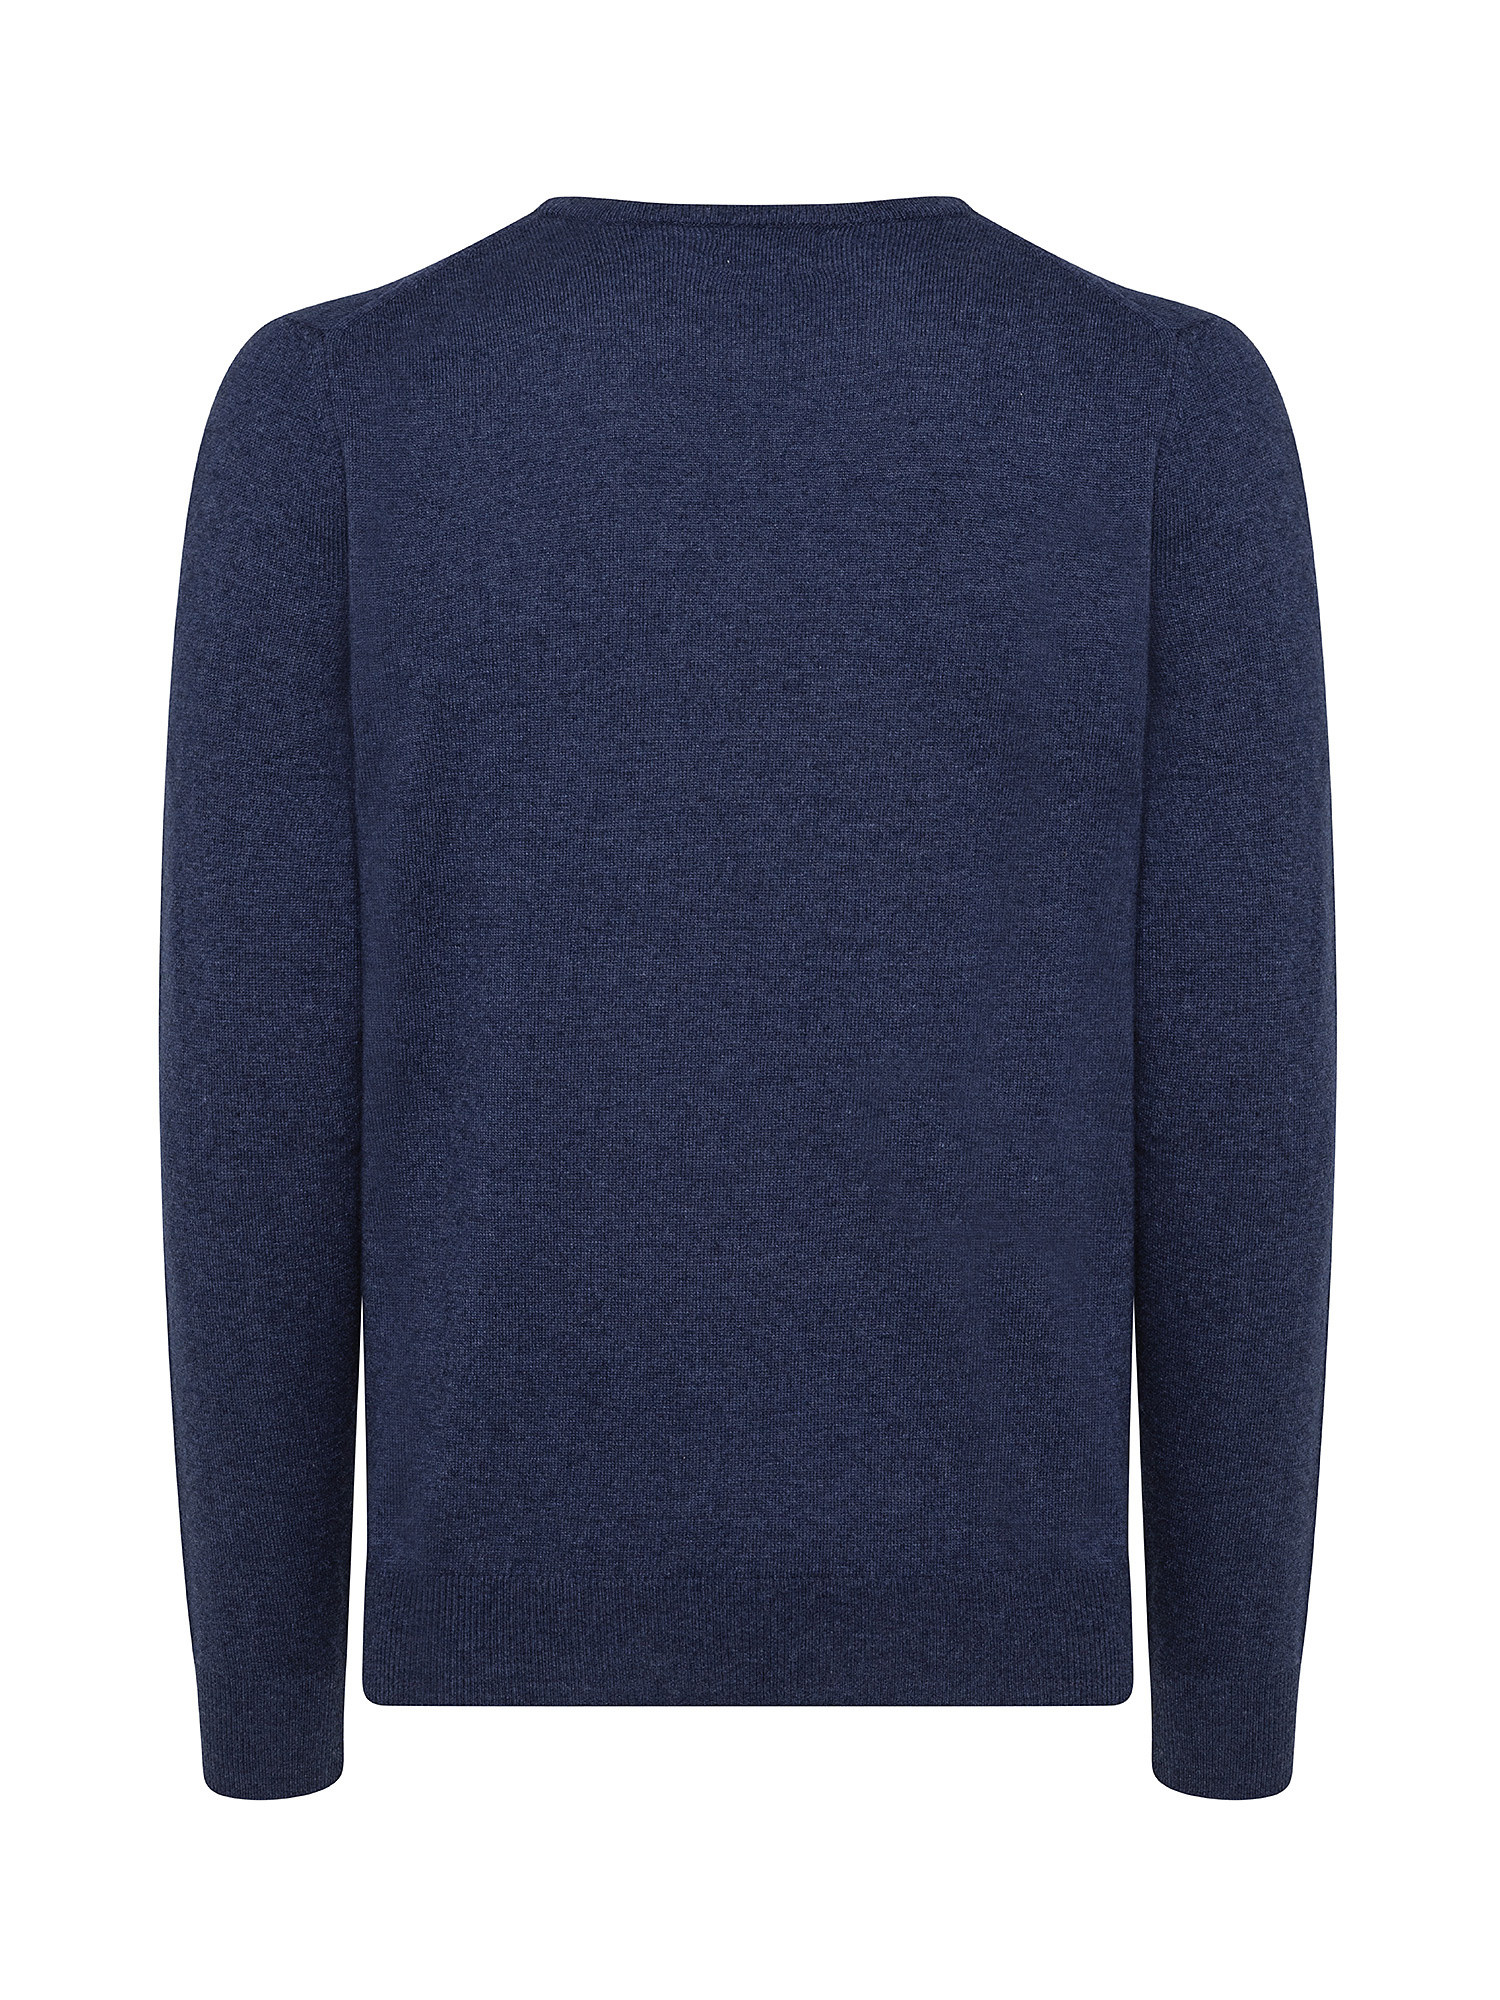 Cashmere Blend crewneck sweater with noble fibers, Denim, large image number 1